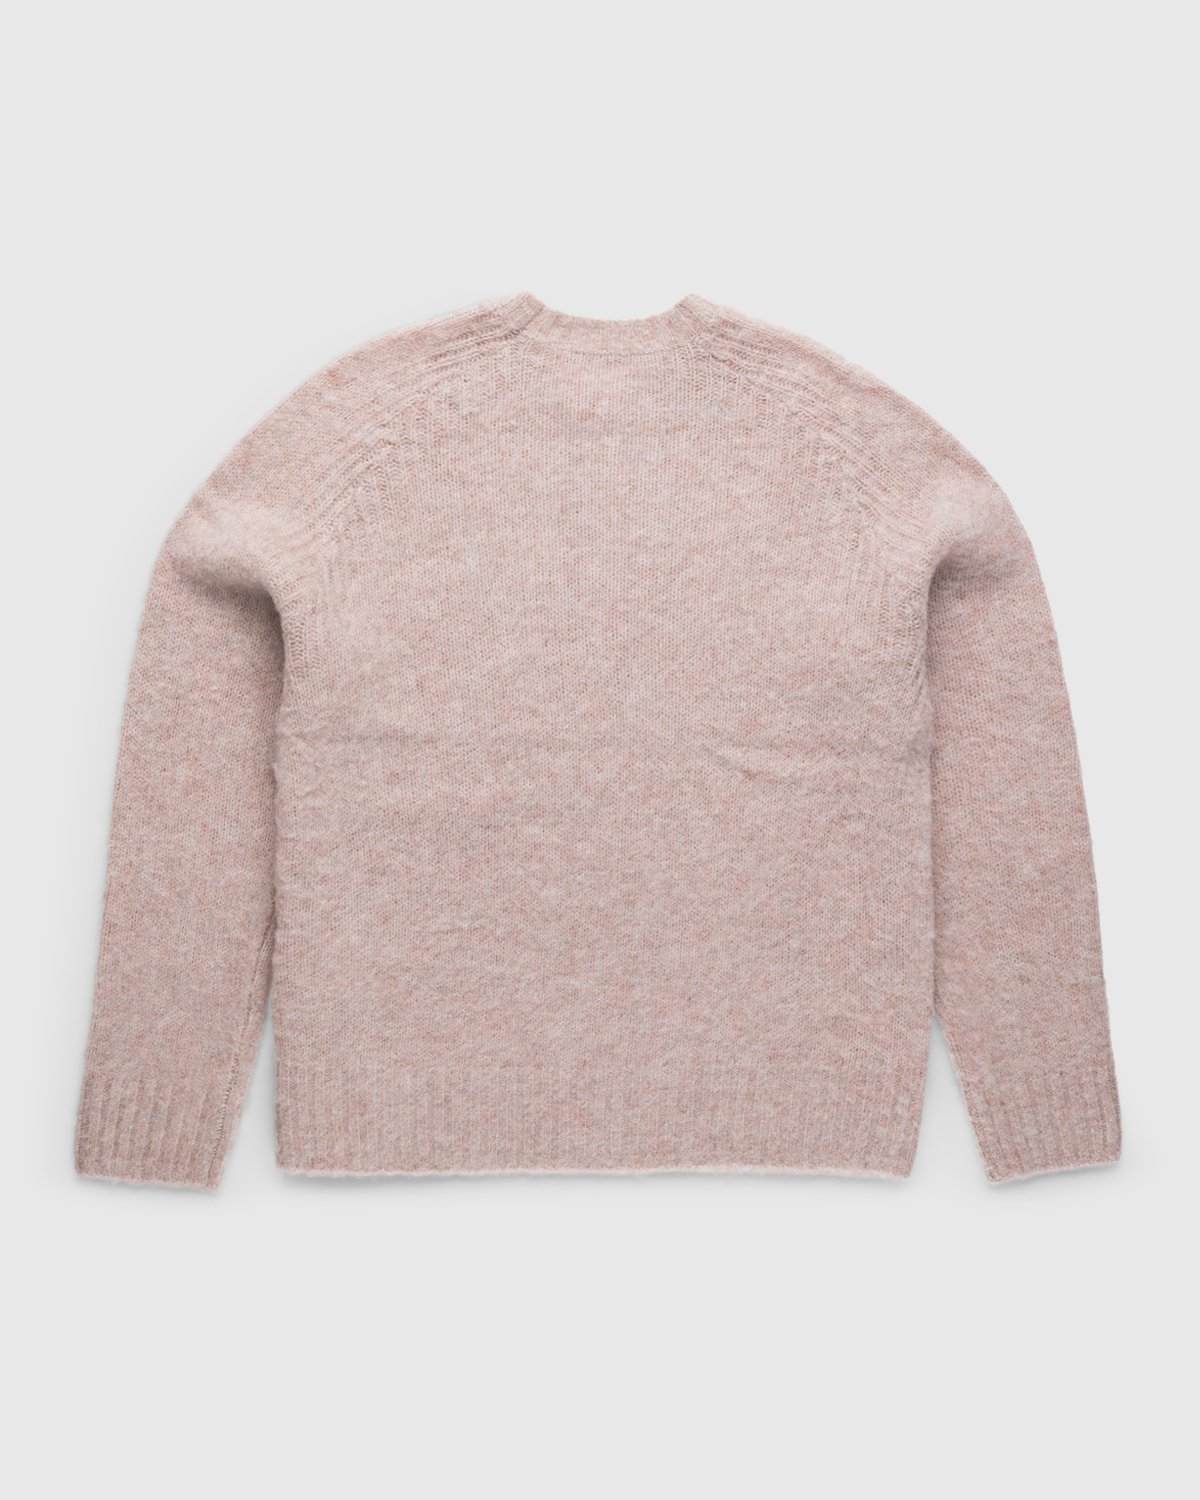 Acne Studios - Knit Sweater Pastel Pink - Clothing - Pink - Image 2